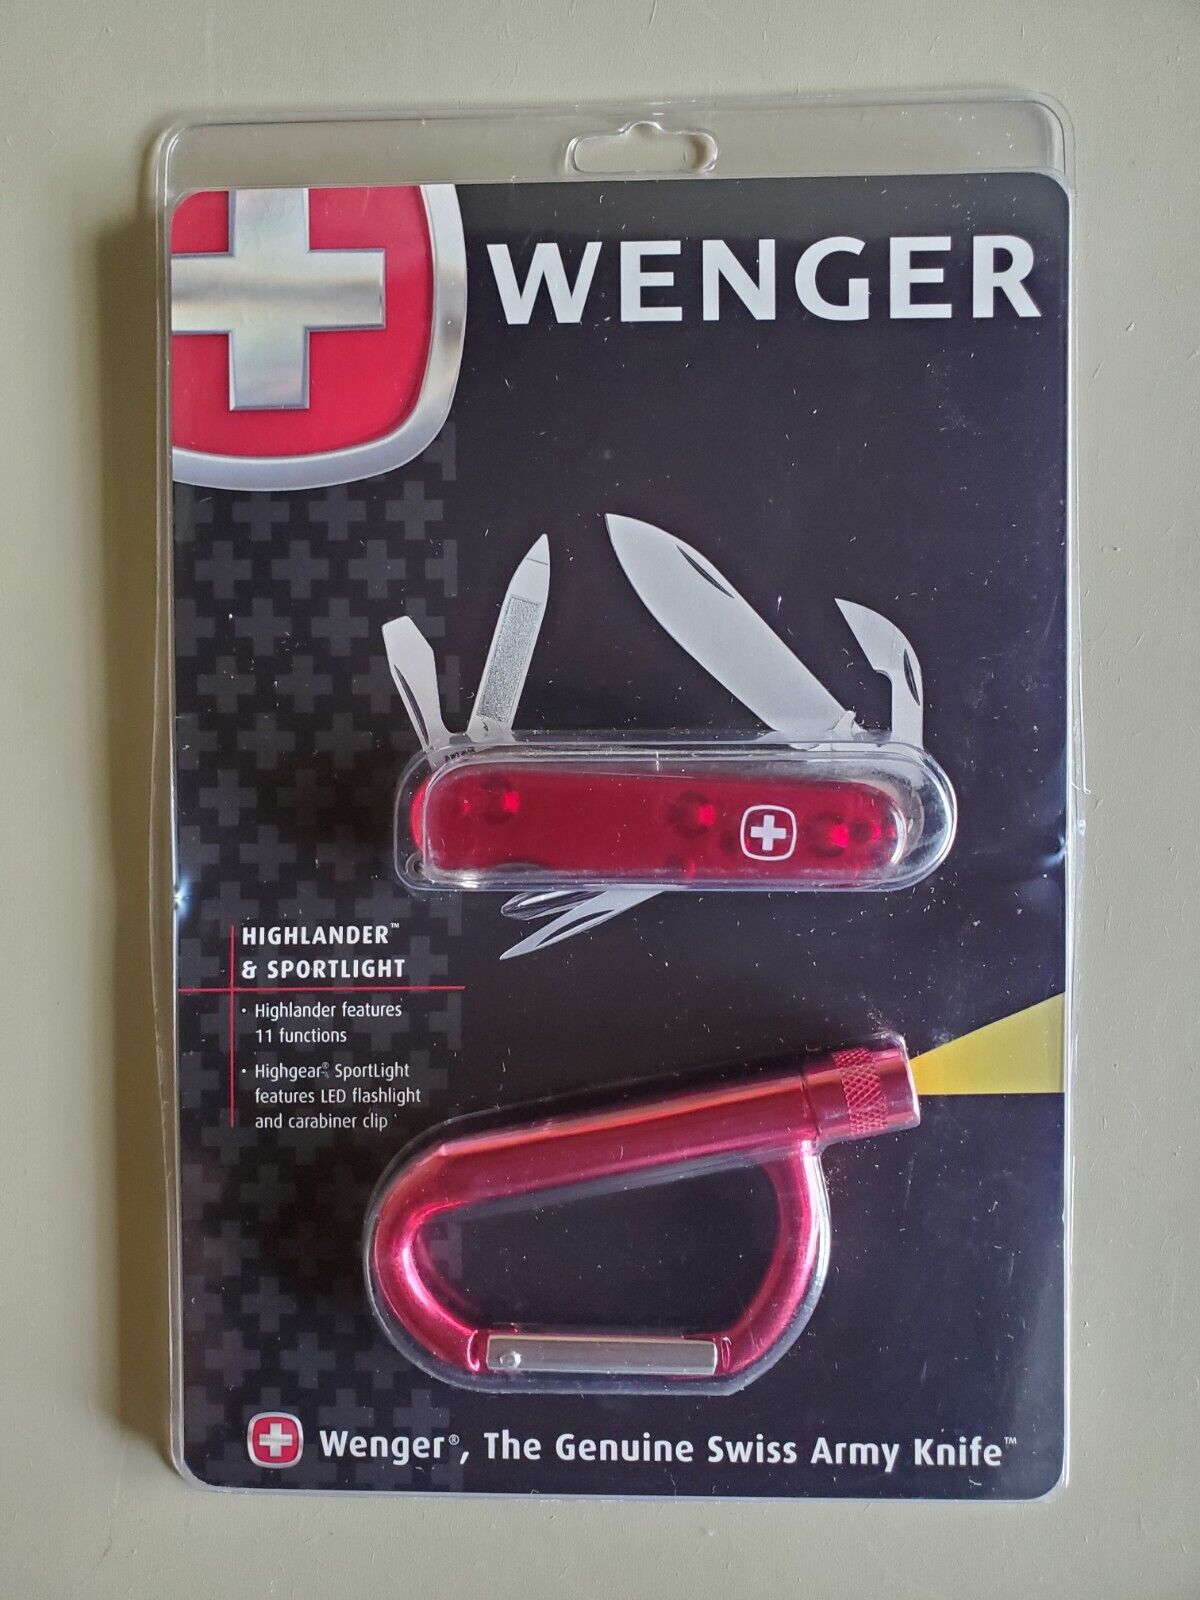 RARE - Wenger Highlander Swiss Army Knife Translucent Red w/ Sportlight - new